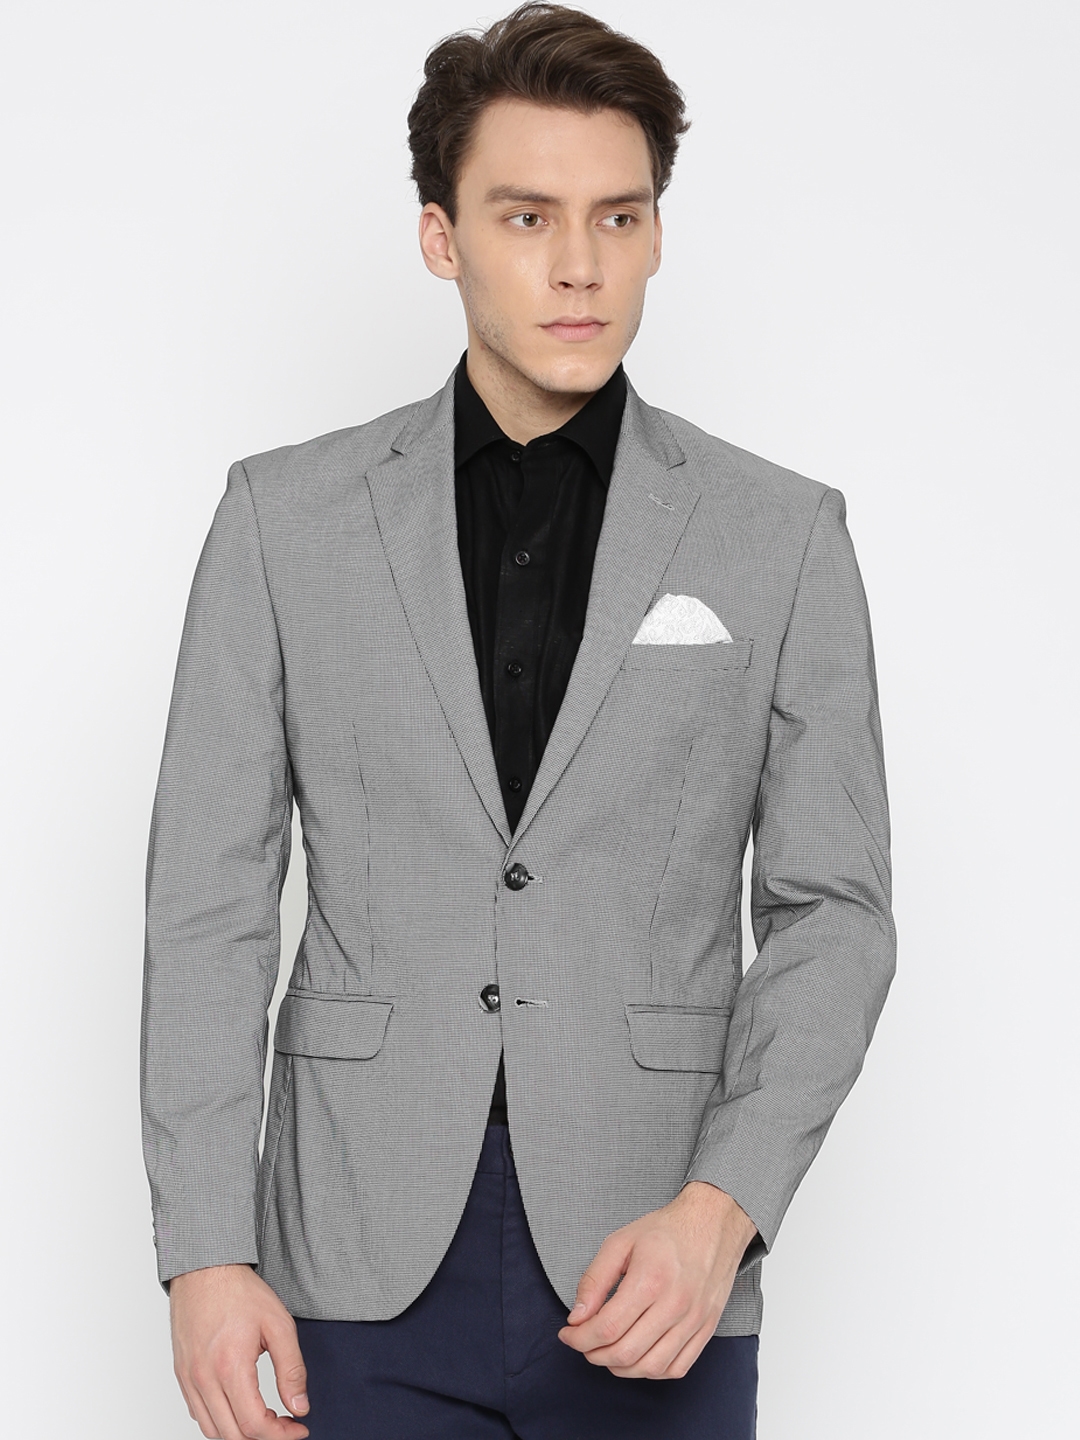 Black Formal Coat For Men Inspiration Thomas Belhom Fashion